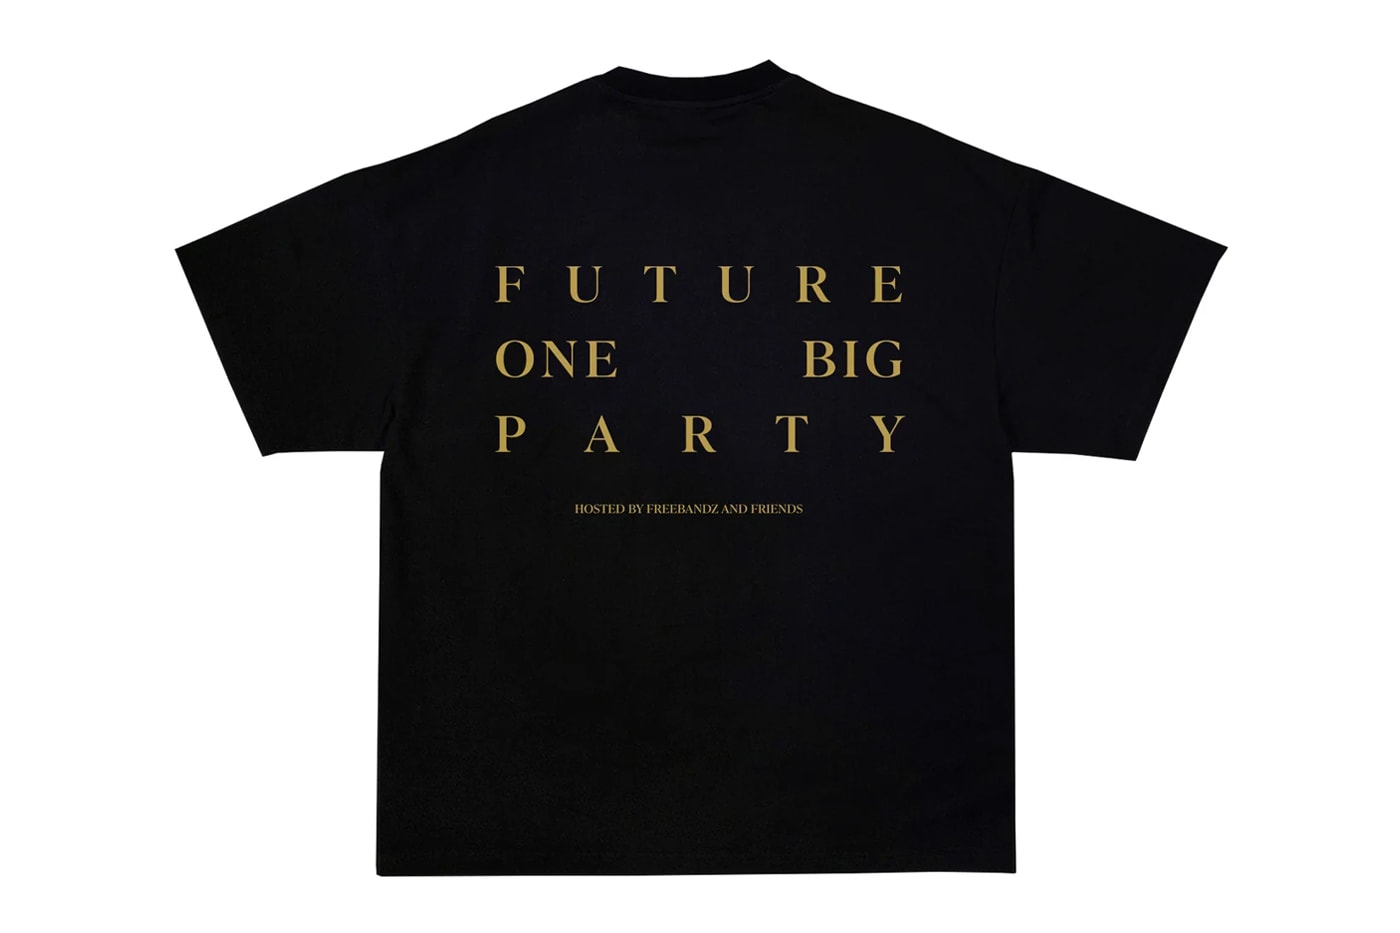 Future Drops Limited Edition 'One Big Party Tour' Merch us rapper hip hop fbg freebandz record label